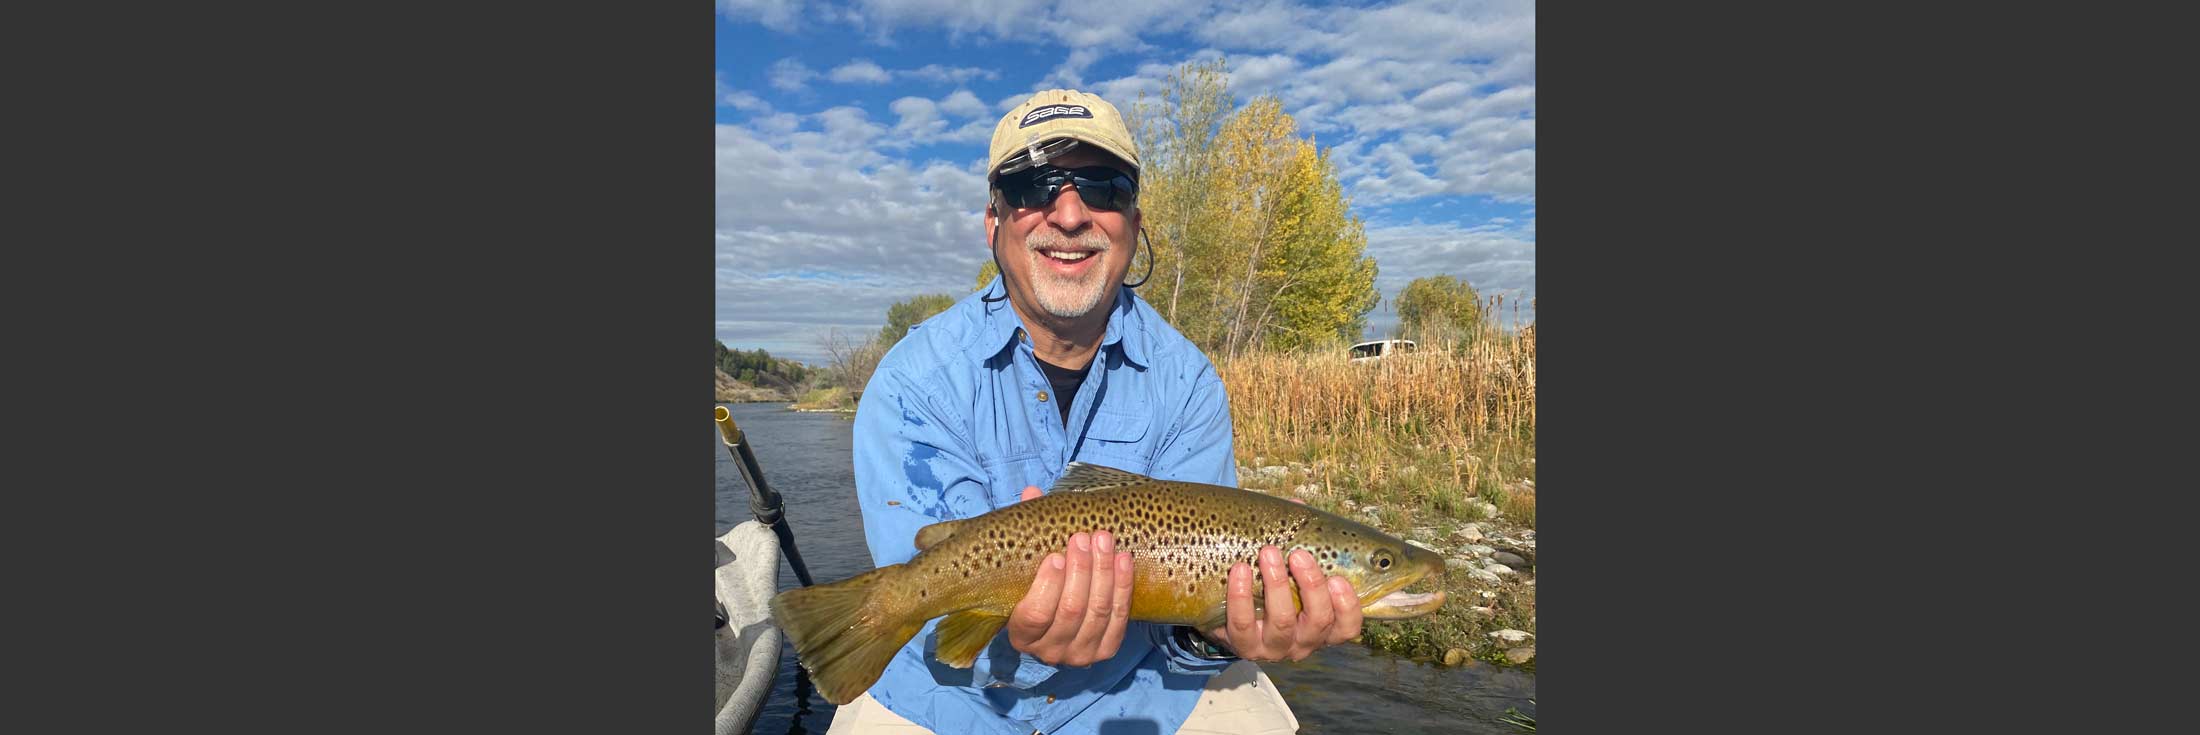 Fall Fishing is Hot in Southeast Montana